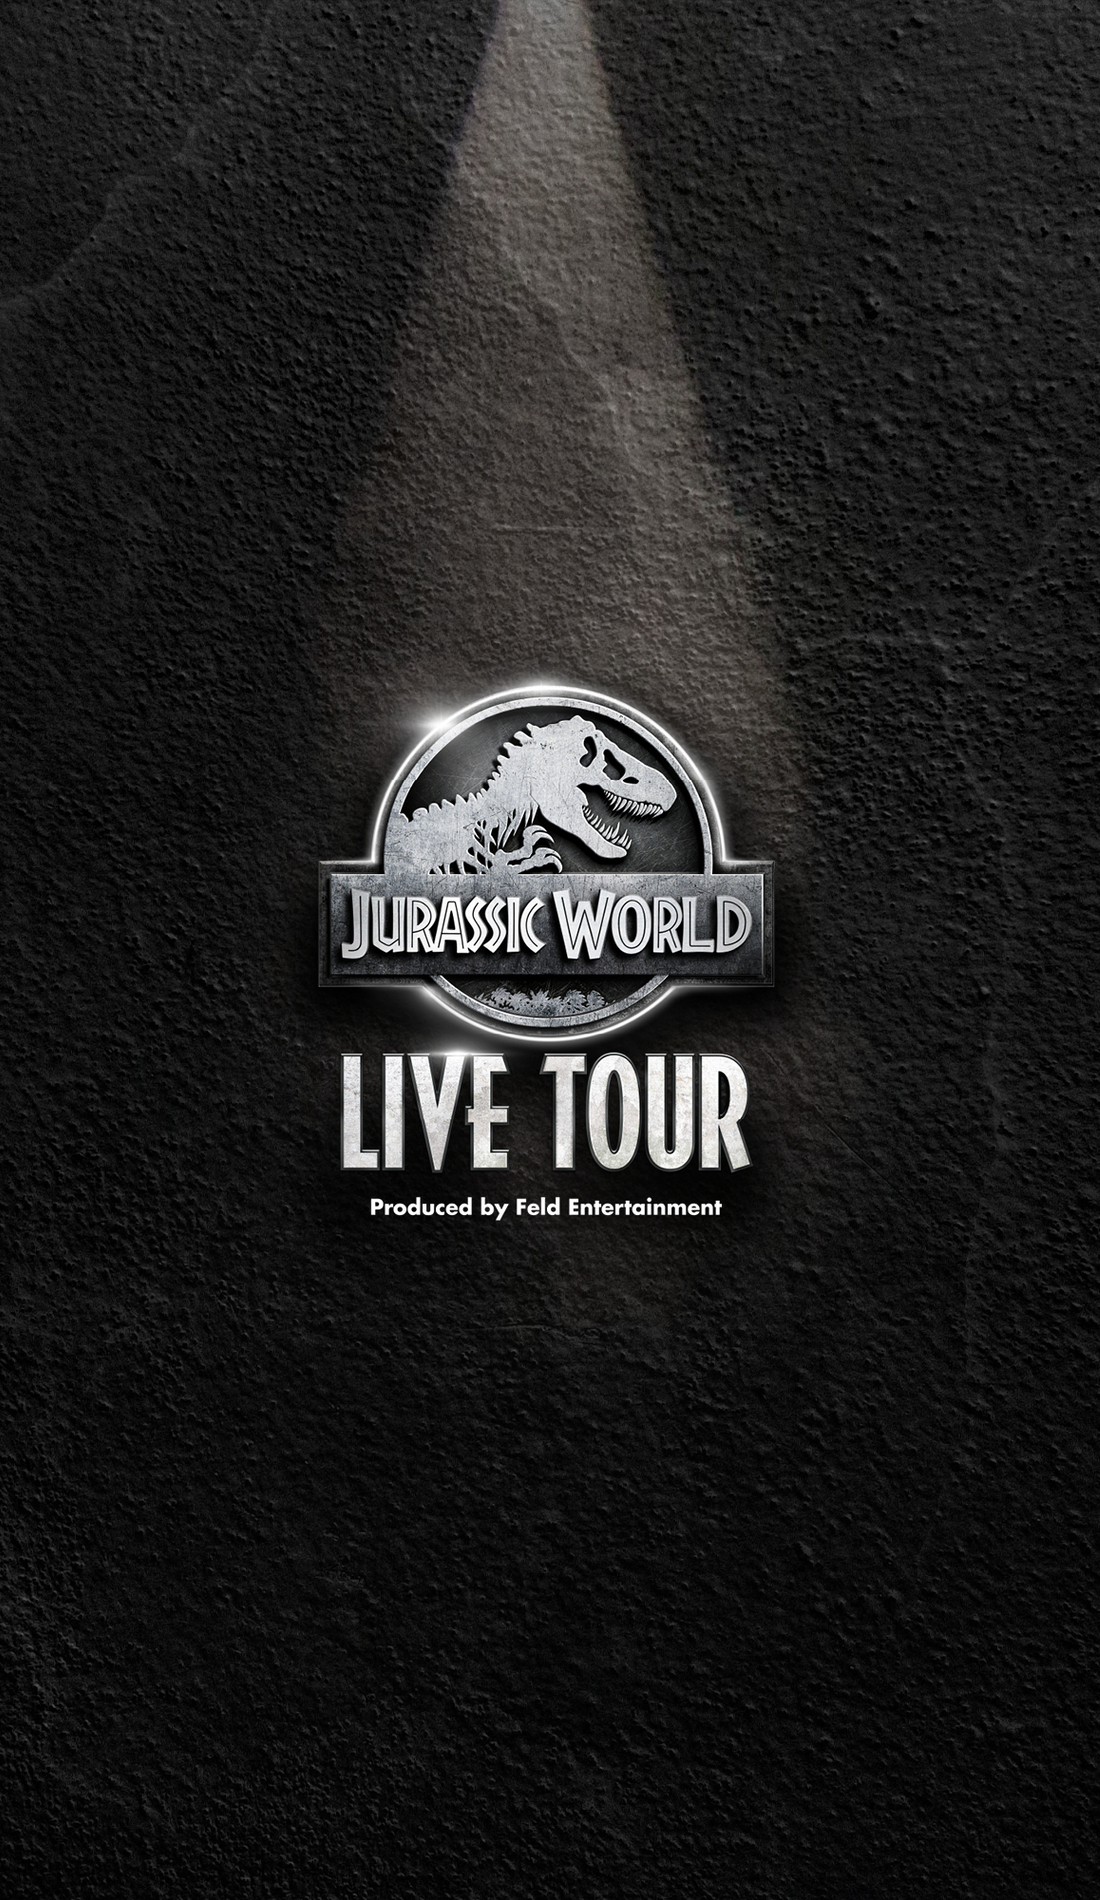 A Jurassic World Live Tour live event